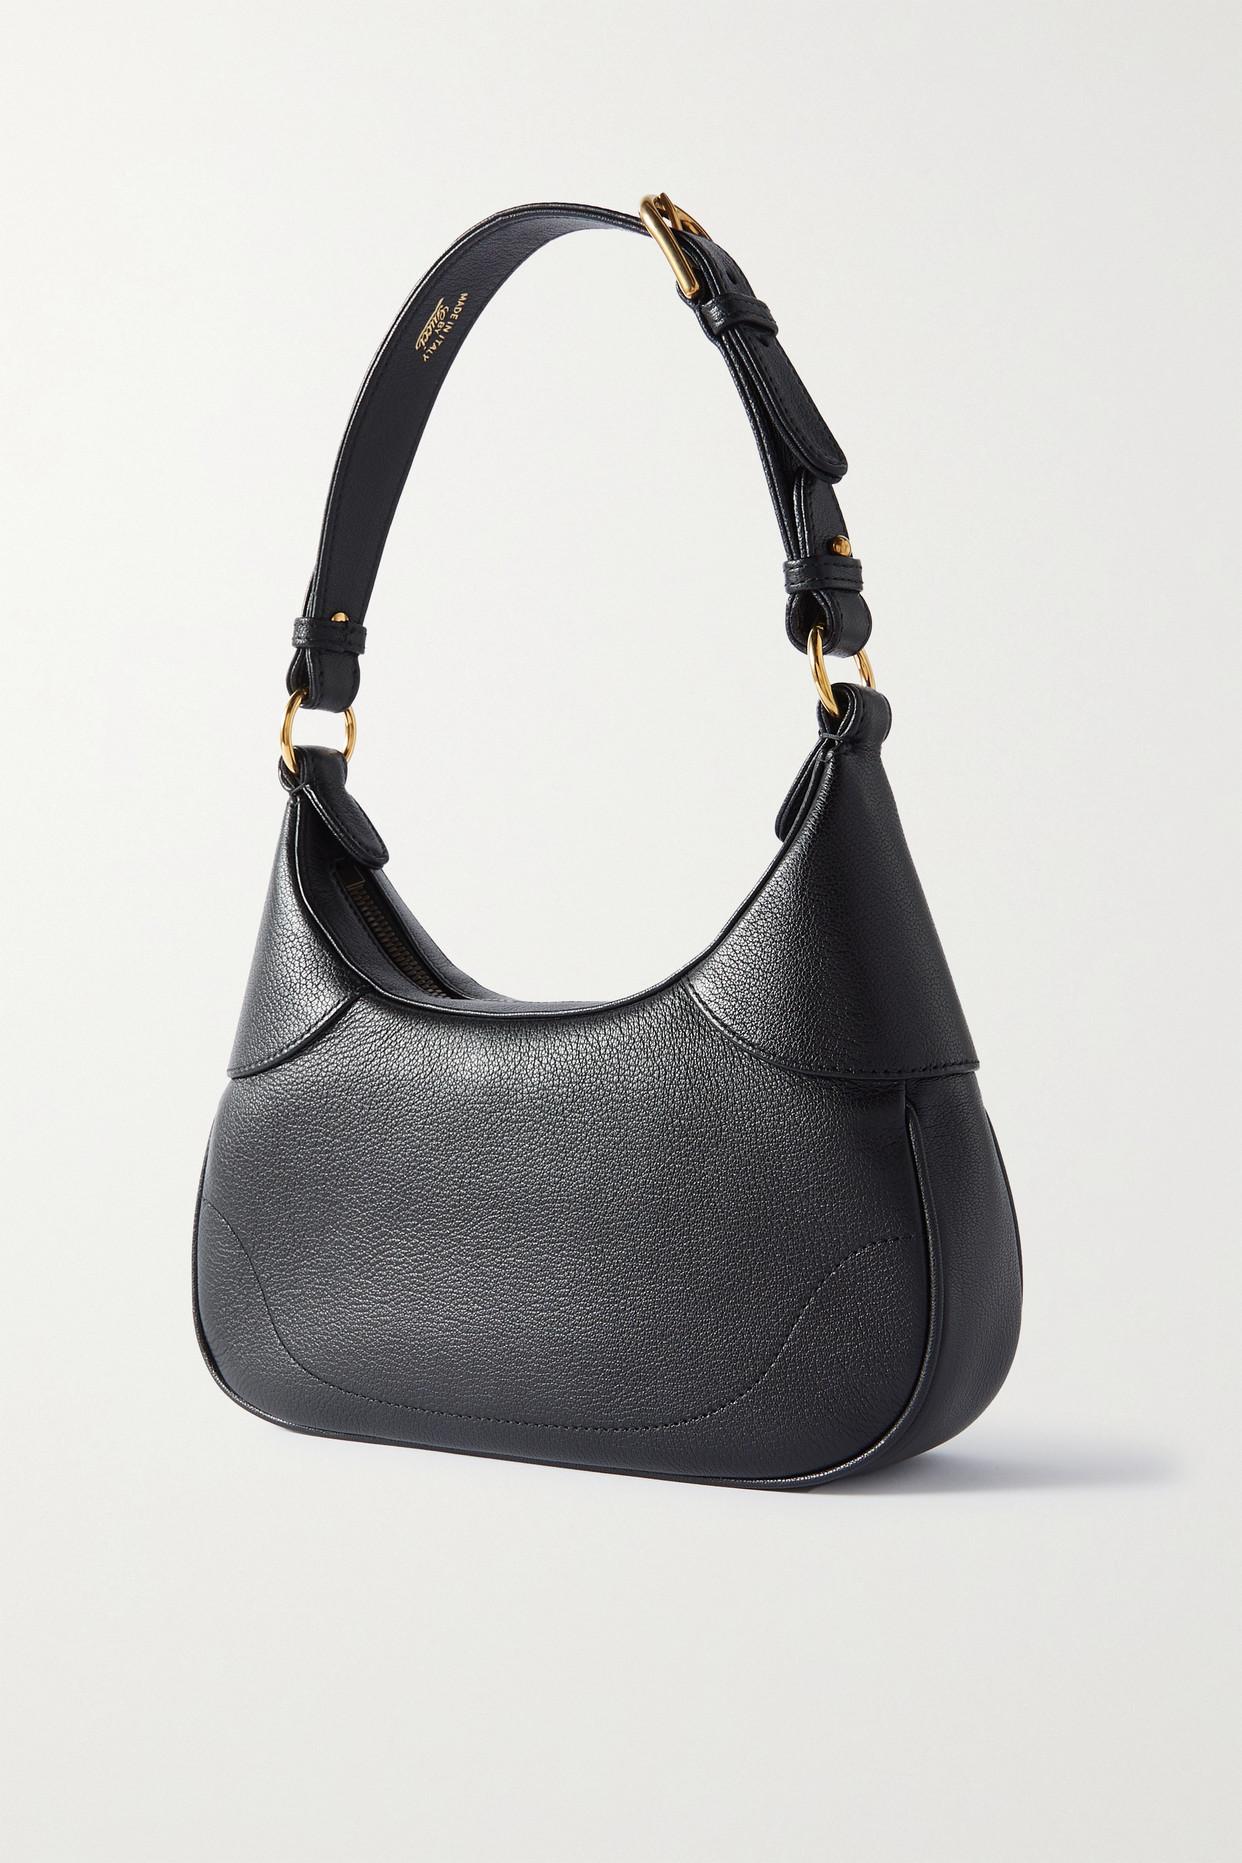 Aphrodite small shoulder bag in black leather